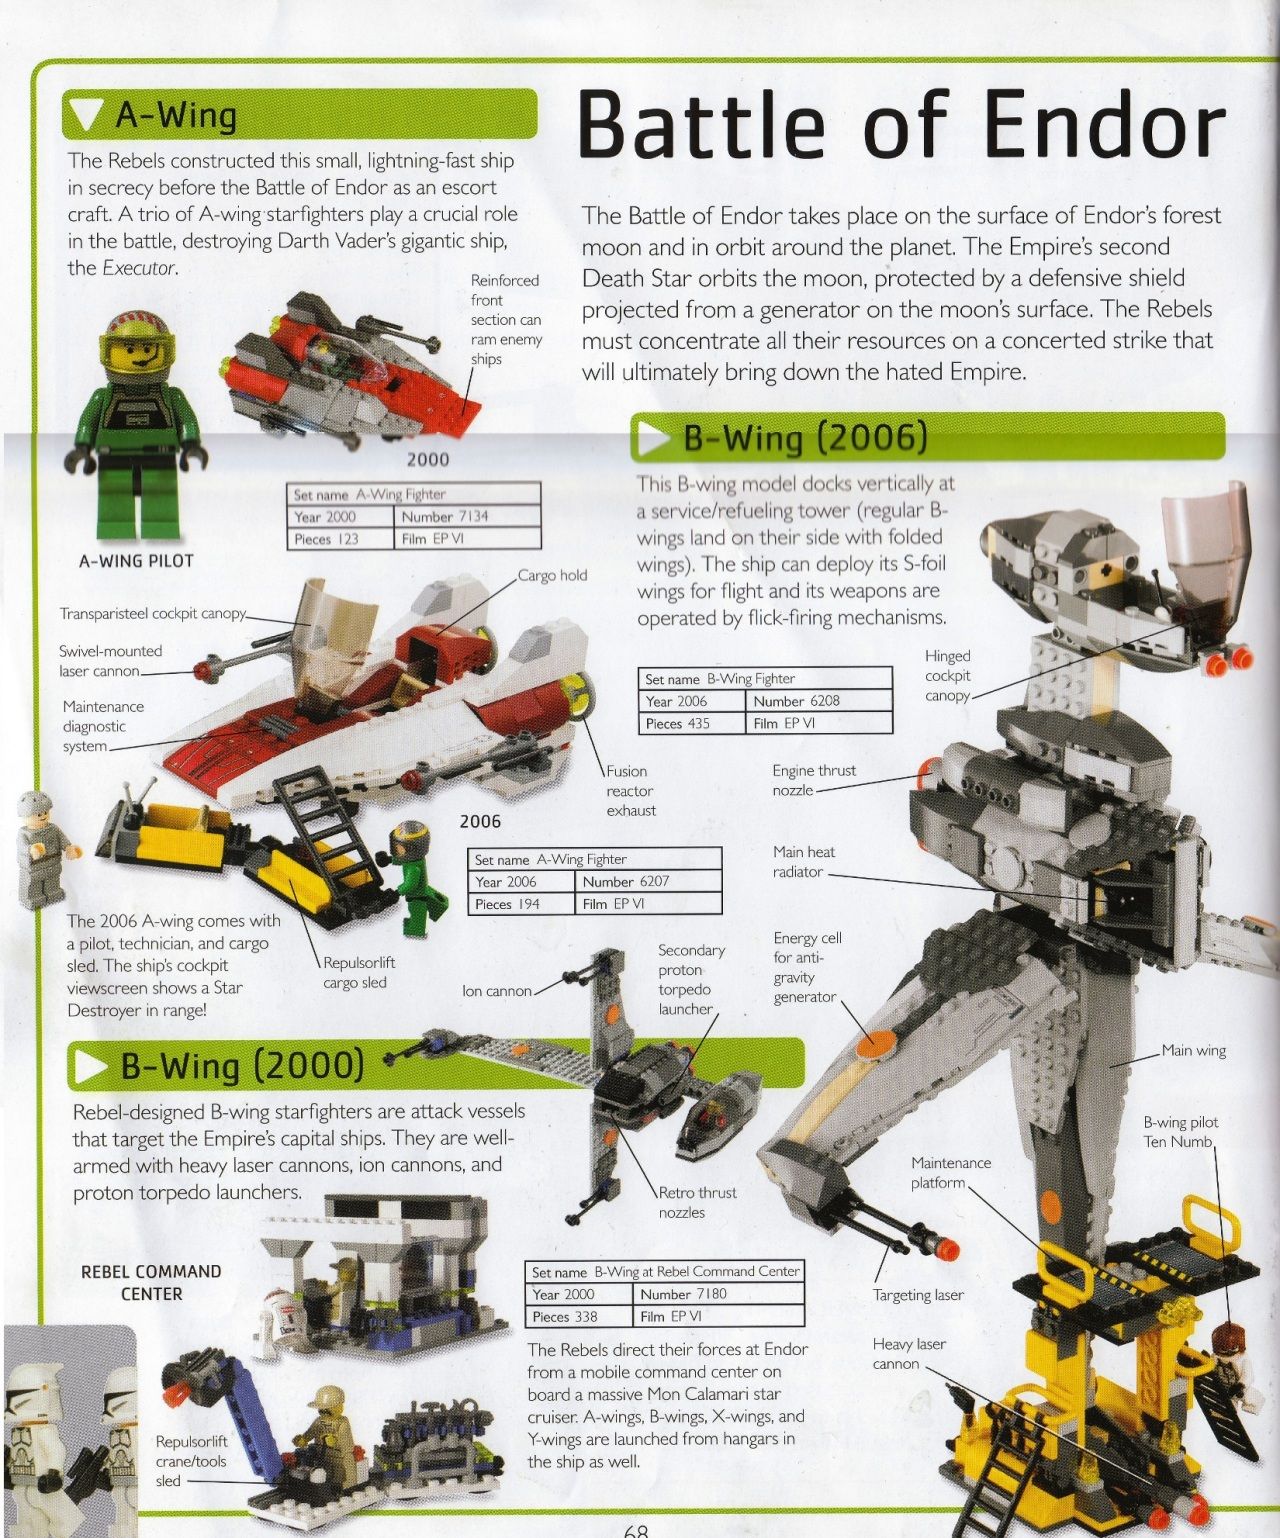 Lego Star Wars The Visual Dictionary 2009 Lego Star Wars The Visual Dictionary 2009 69